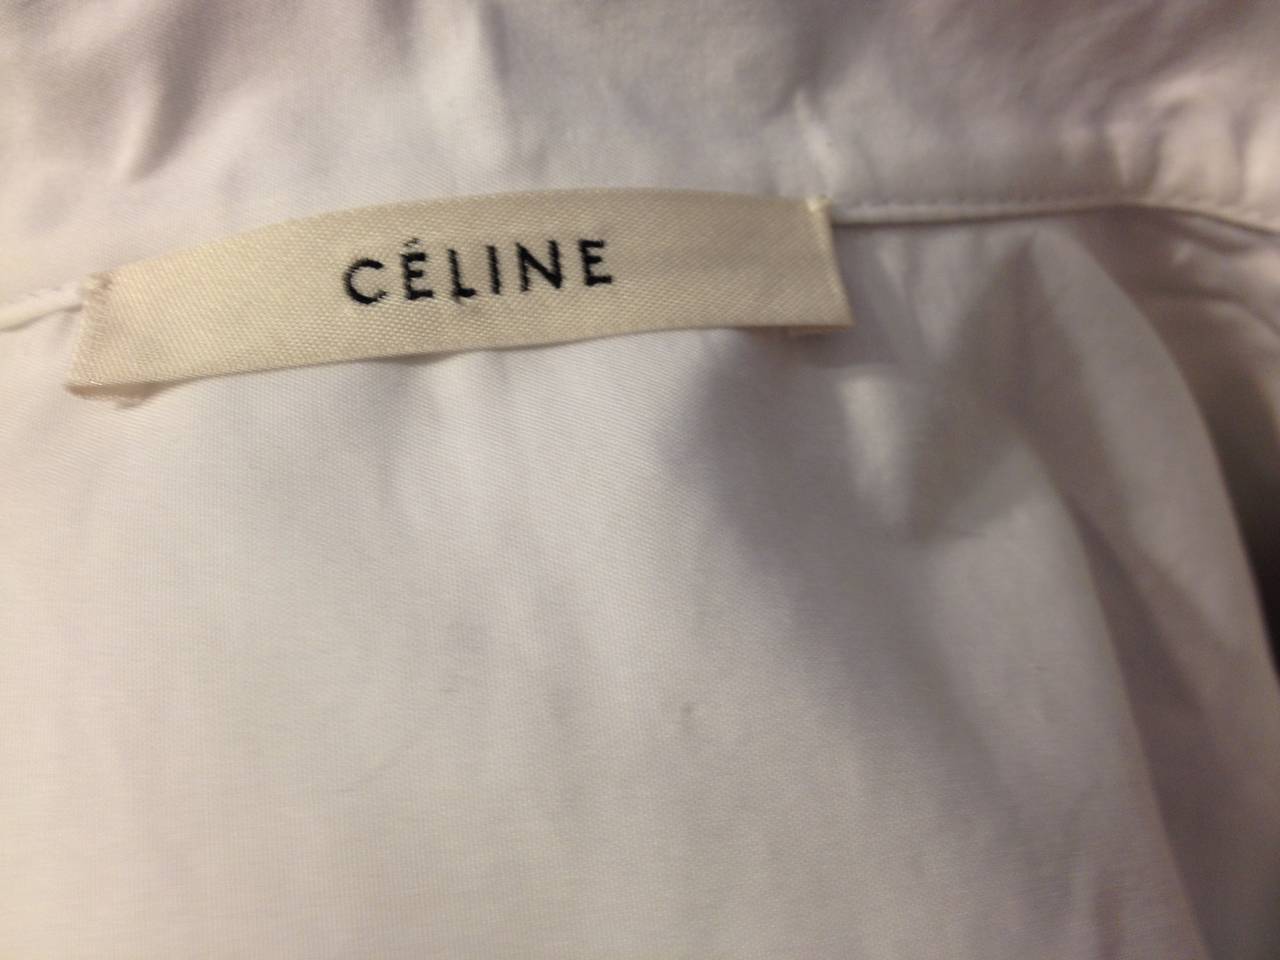 Céline White Shirt with Navy Chiffon Overlay 2